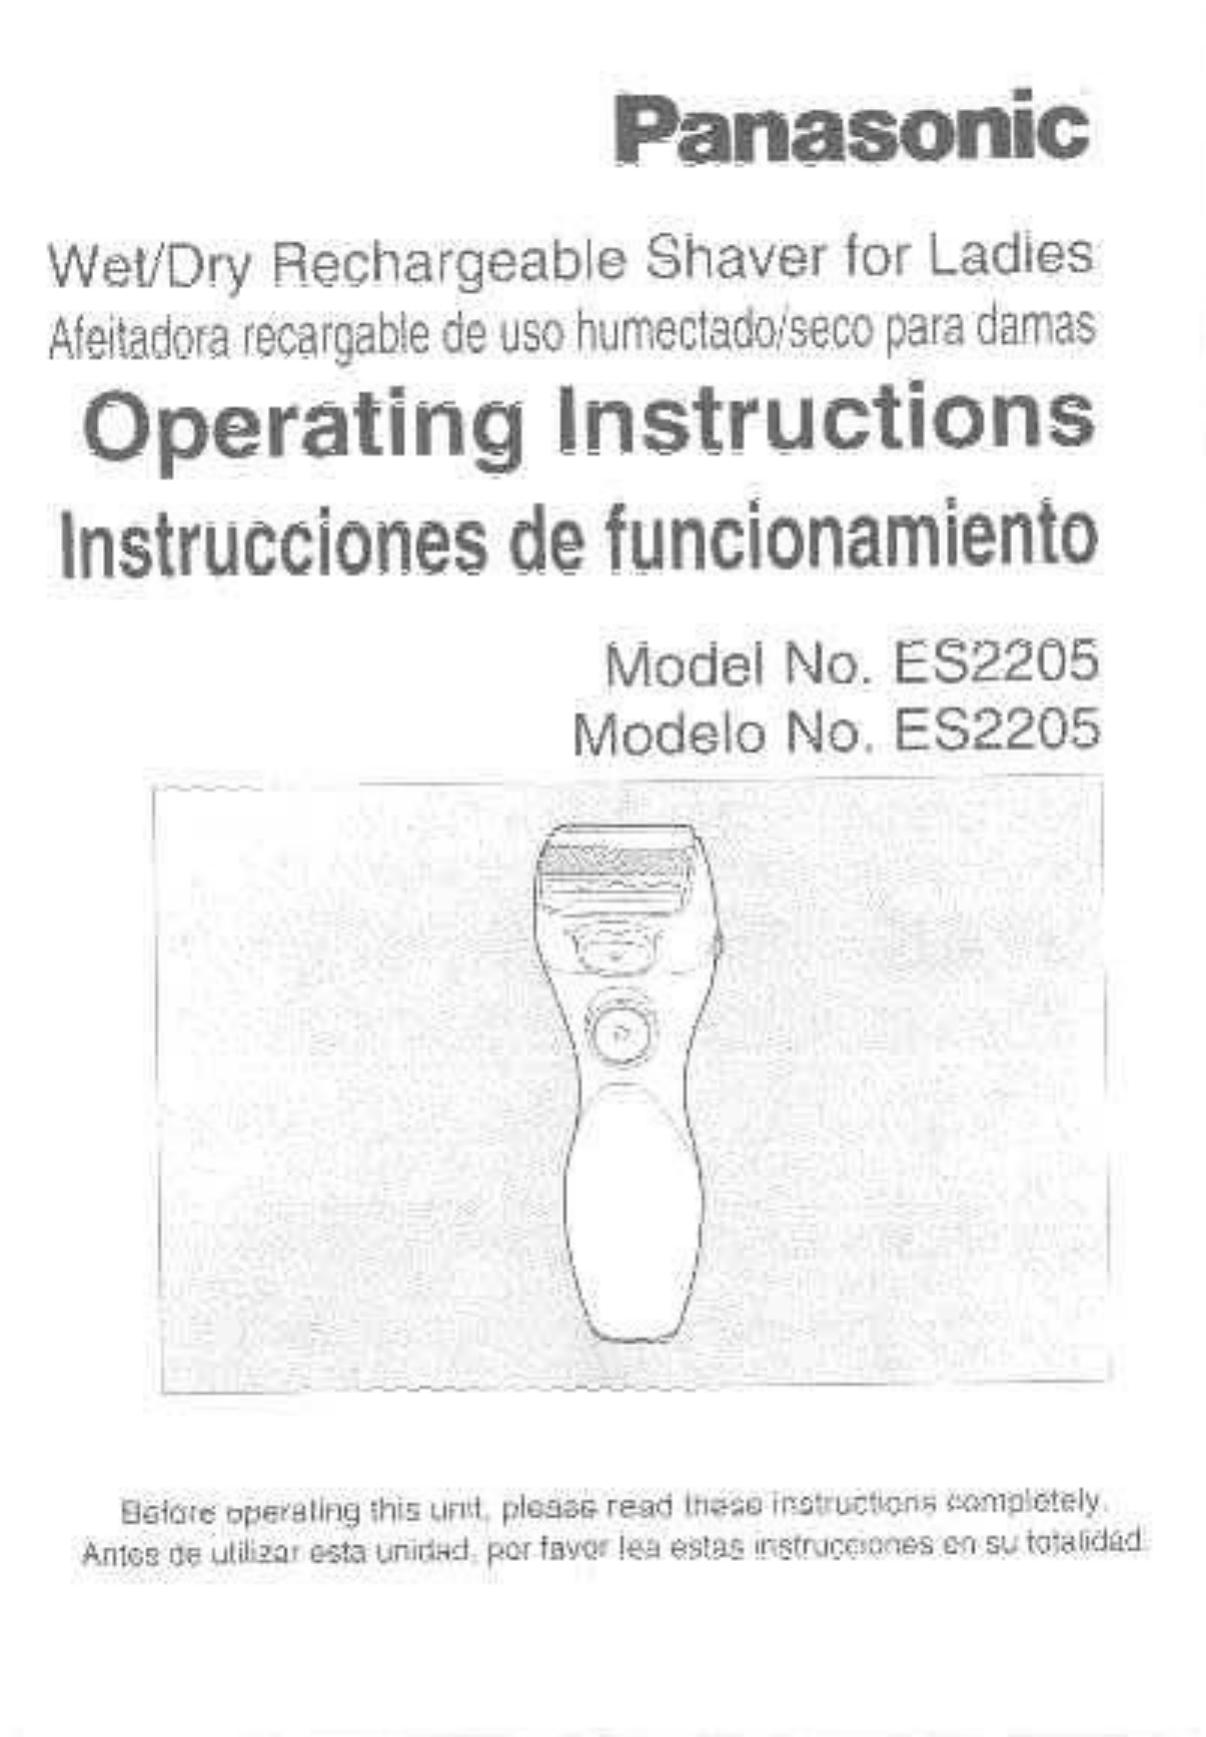 Panasonic ES2205 Electric Shaver User Manual